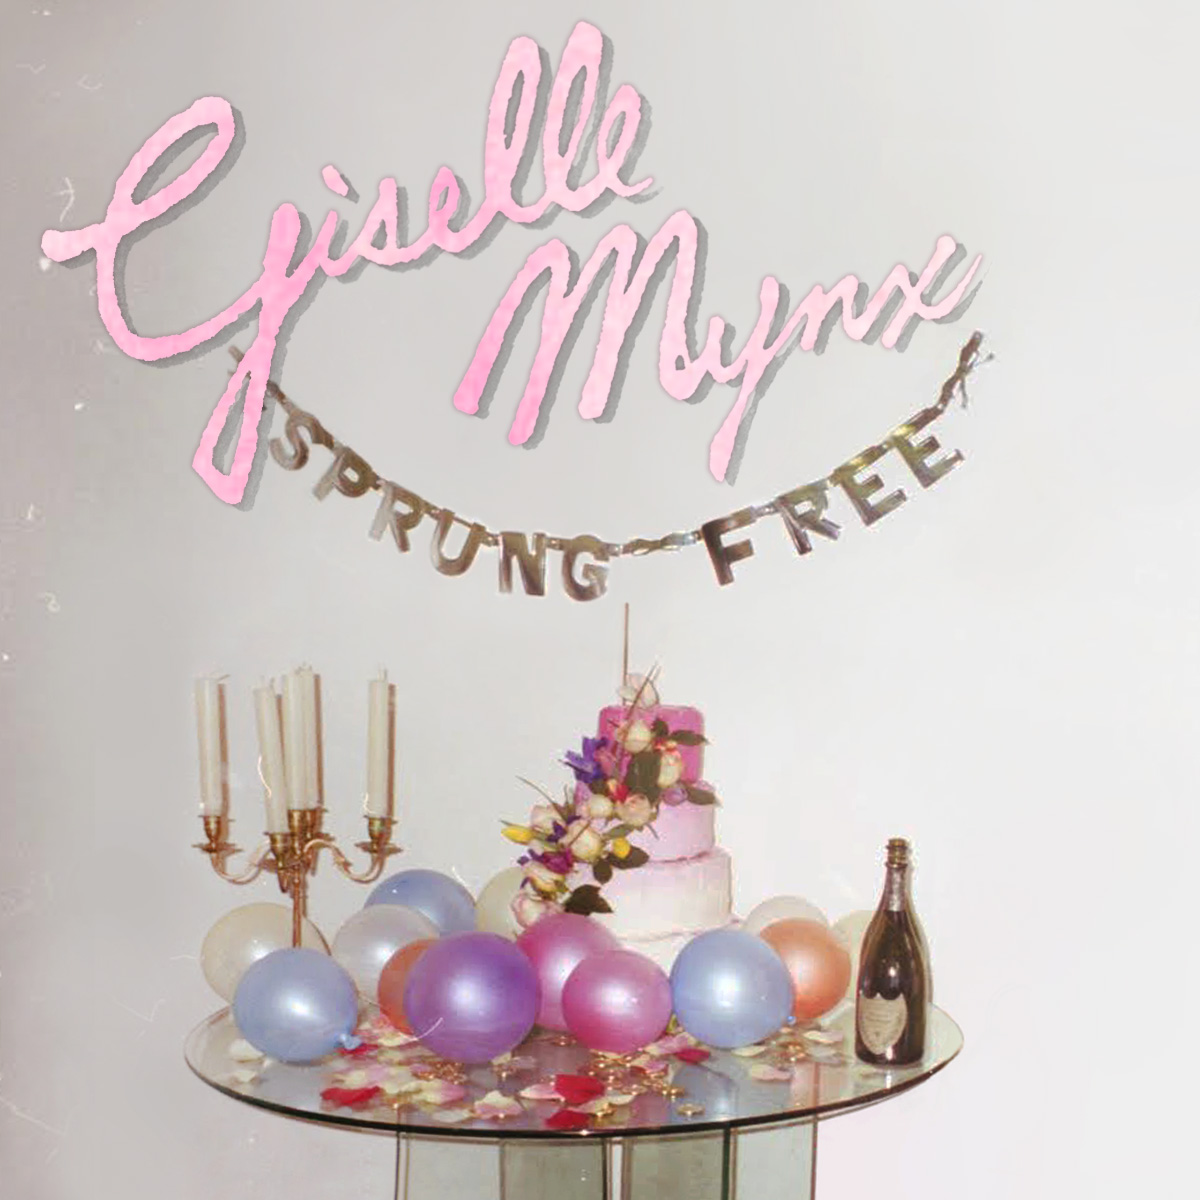 GISELLE MYNX - SPRUNG FREE - Album Art.jpg